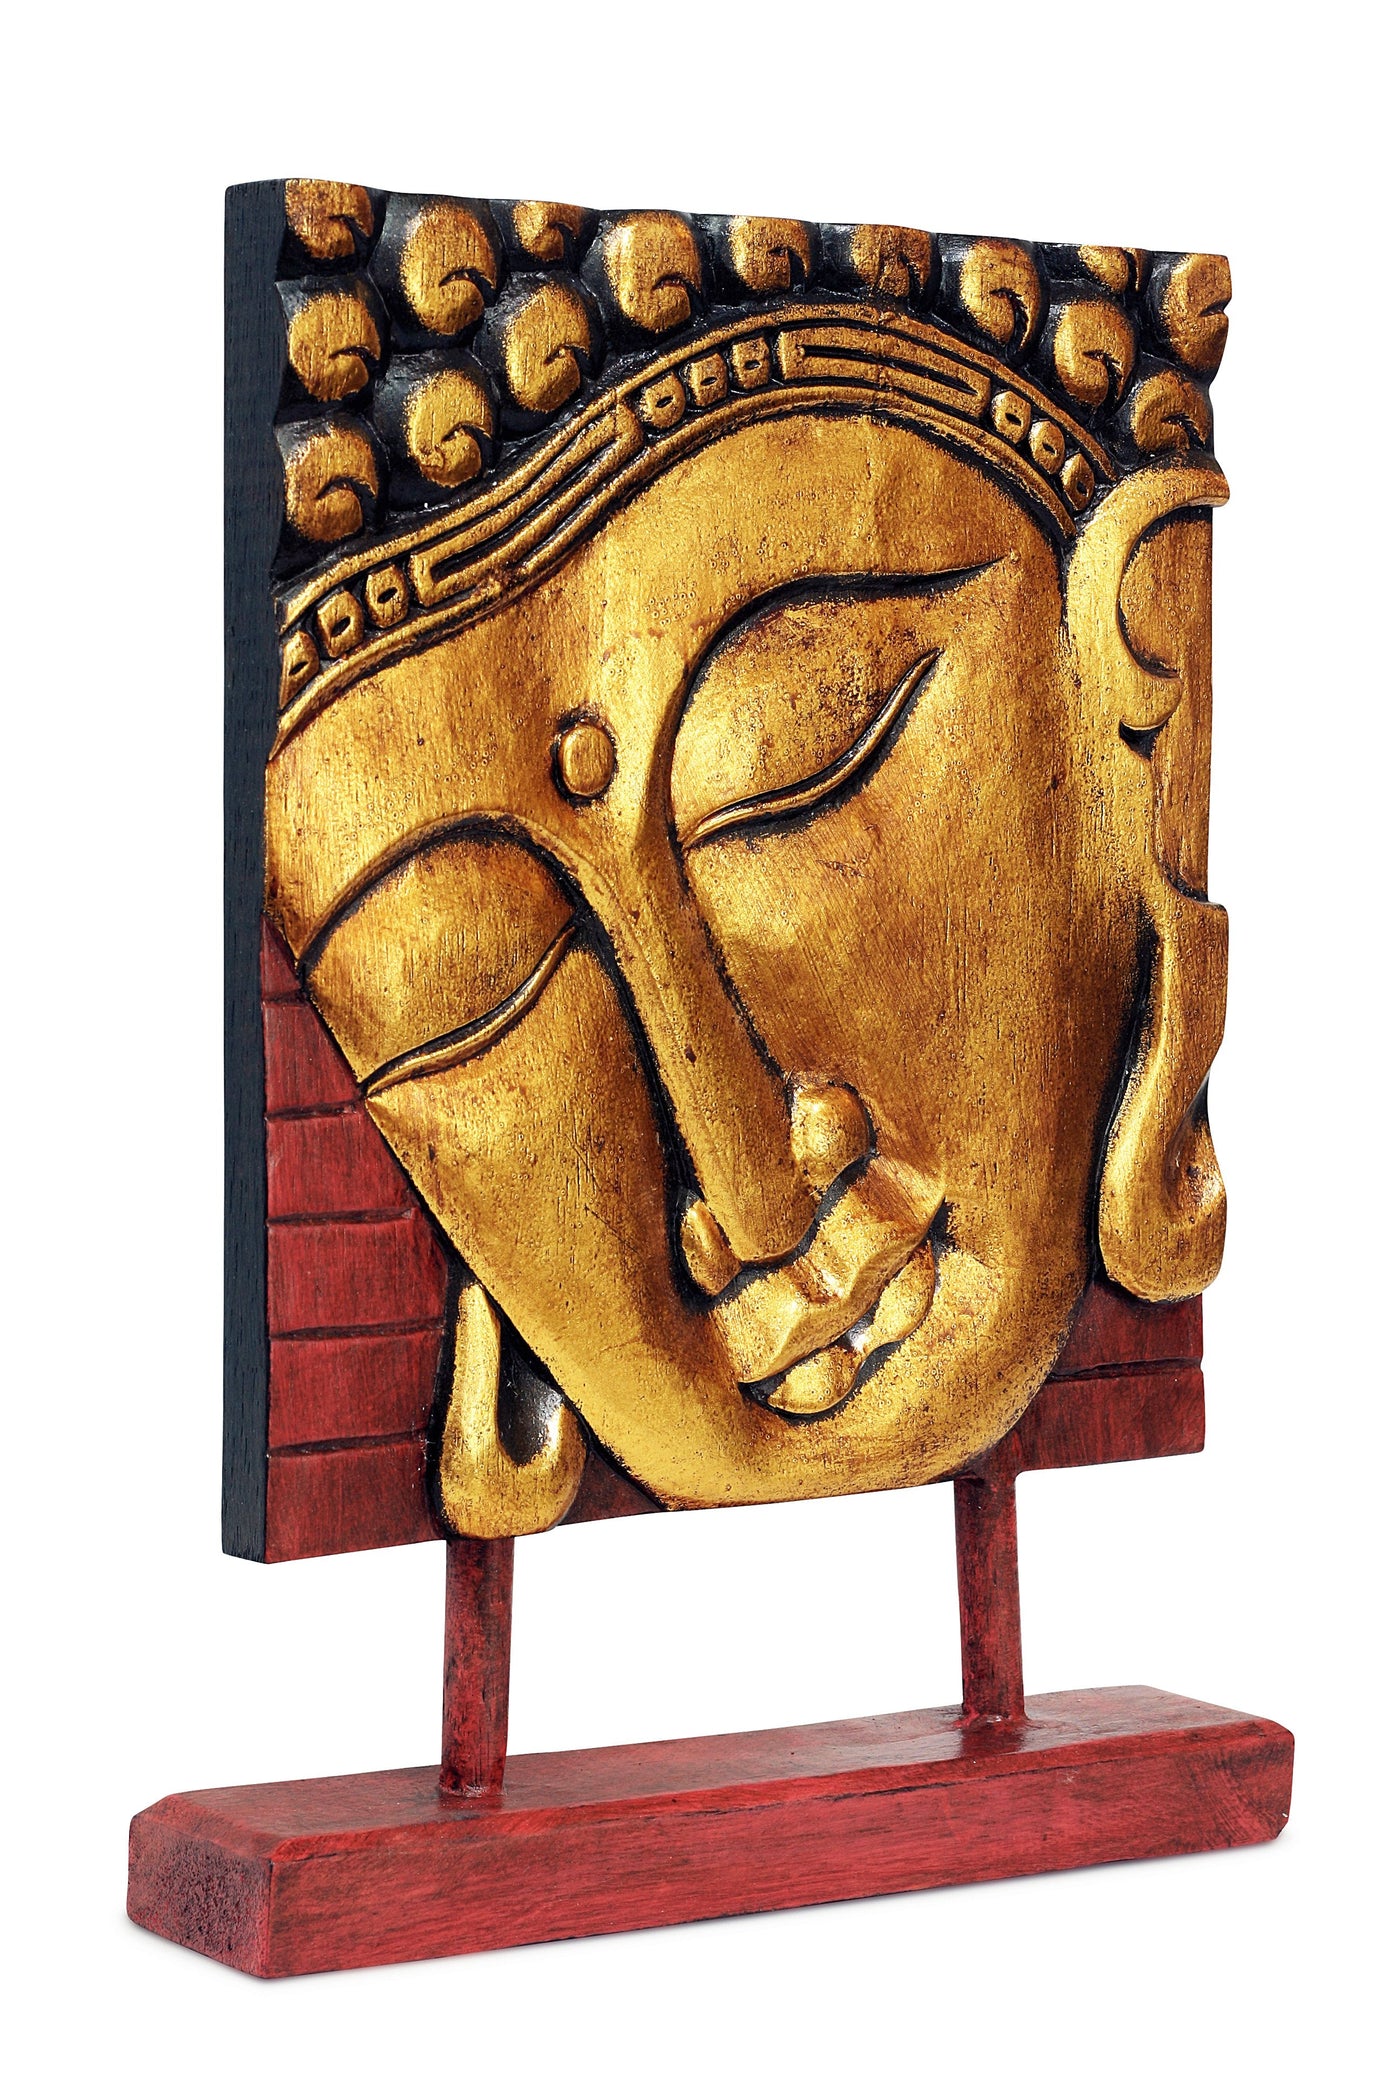 15" Wooden Serene Buddha Head Plaque Gold Statue Handmade Meditating Sculpture Figurine Decorative Home Decor Accent Handcrafted Art Oriental